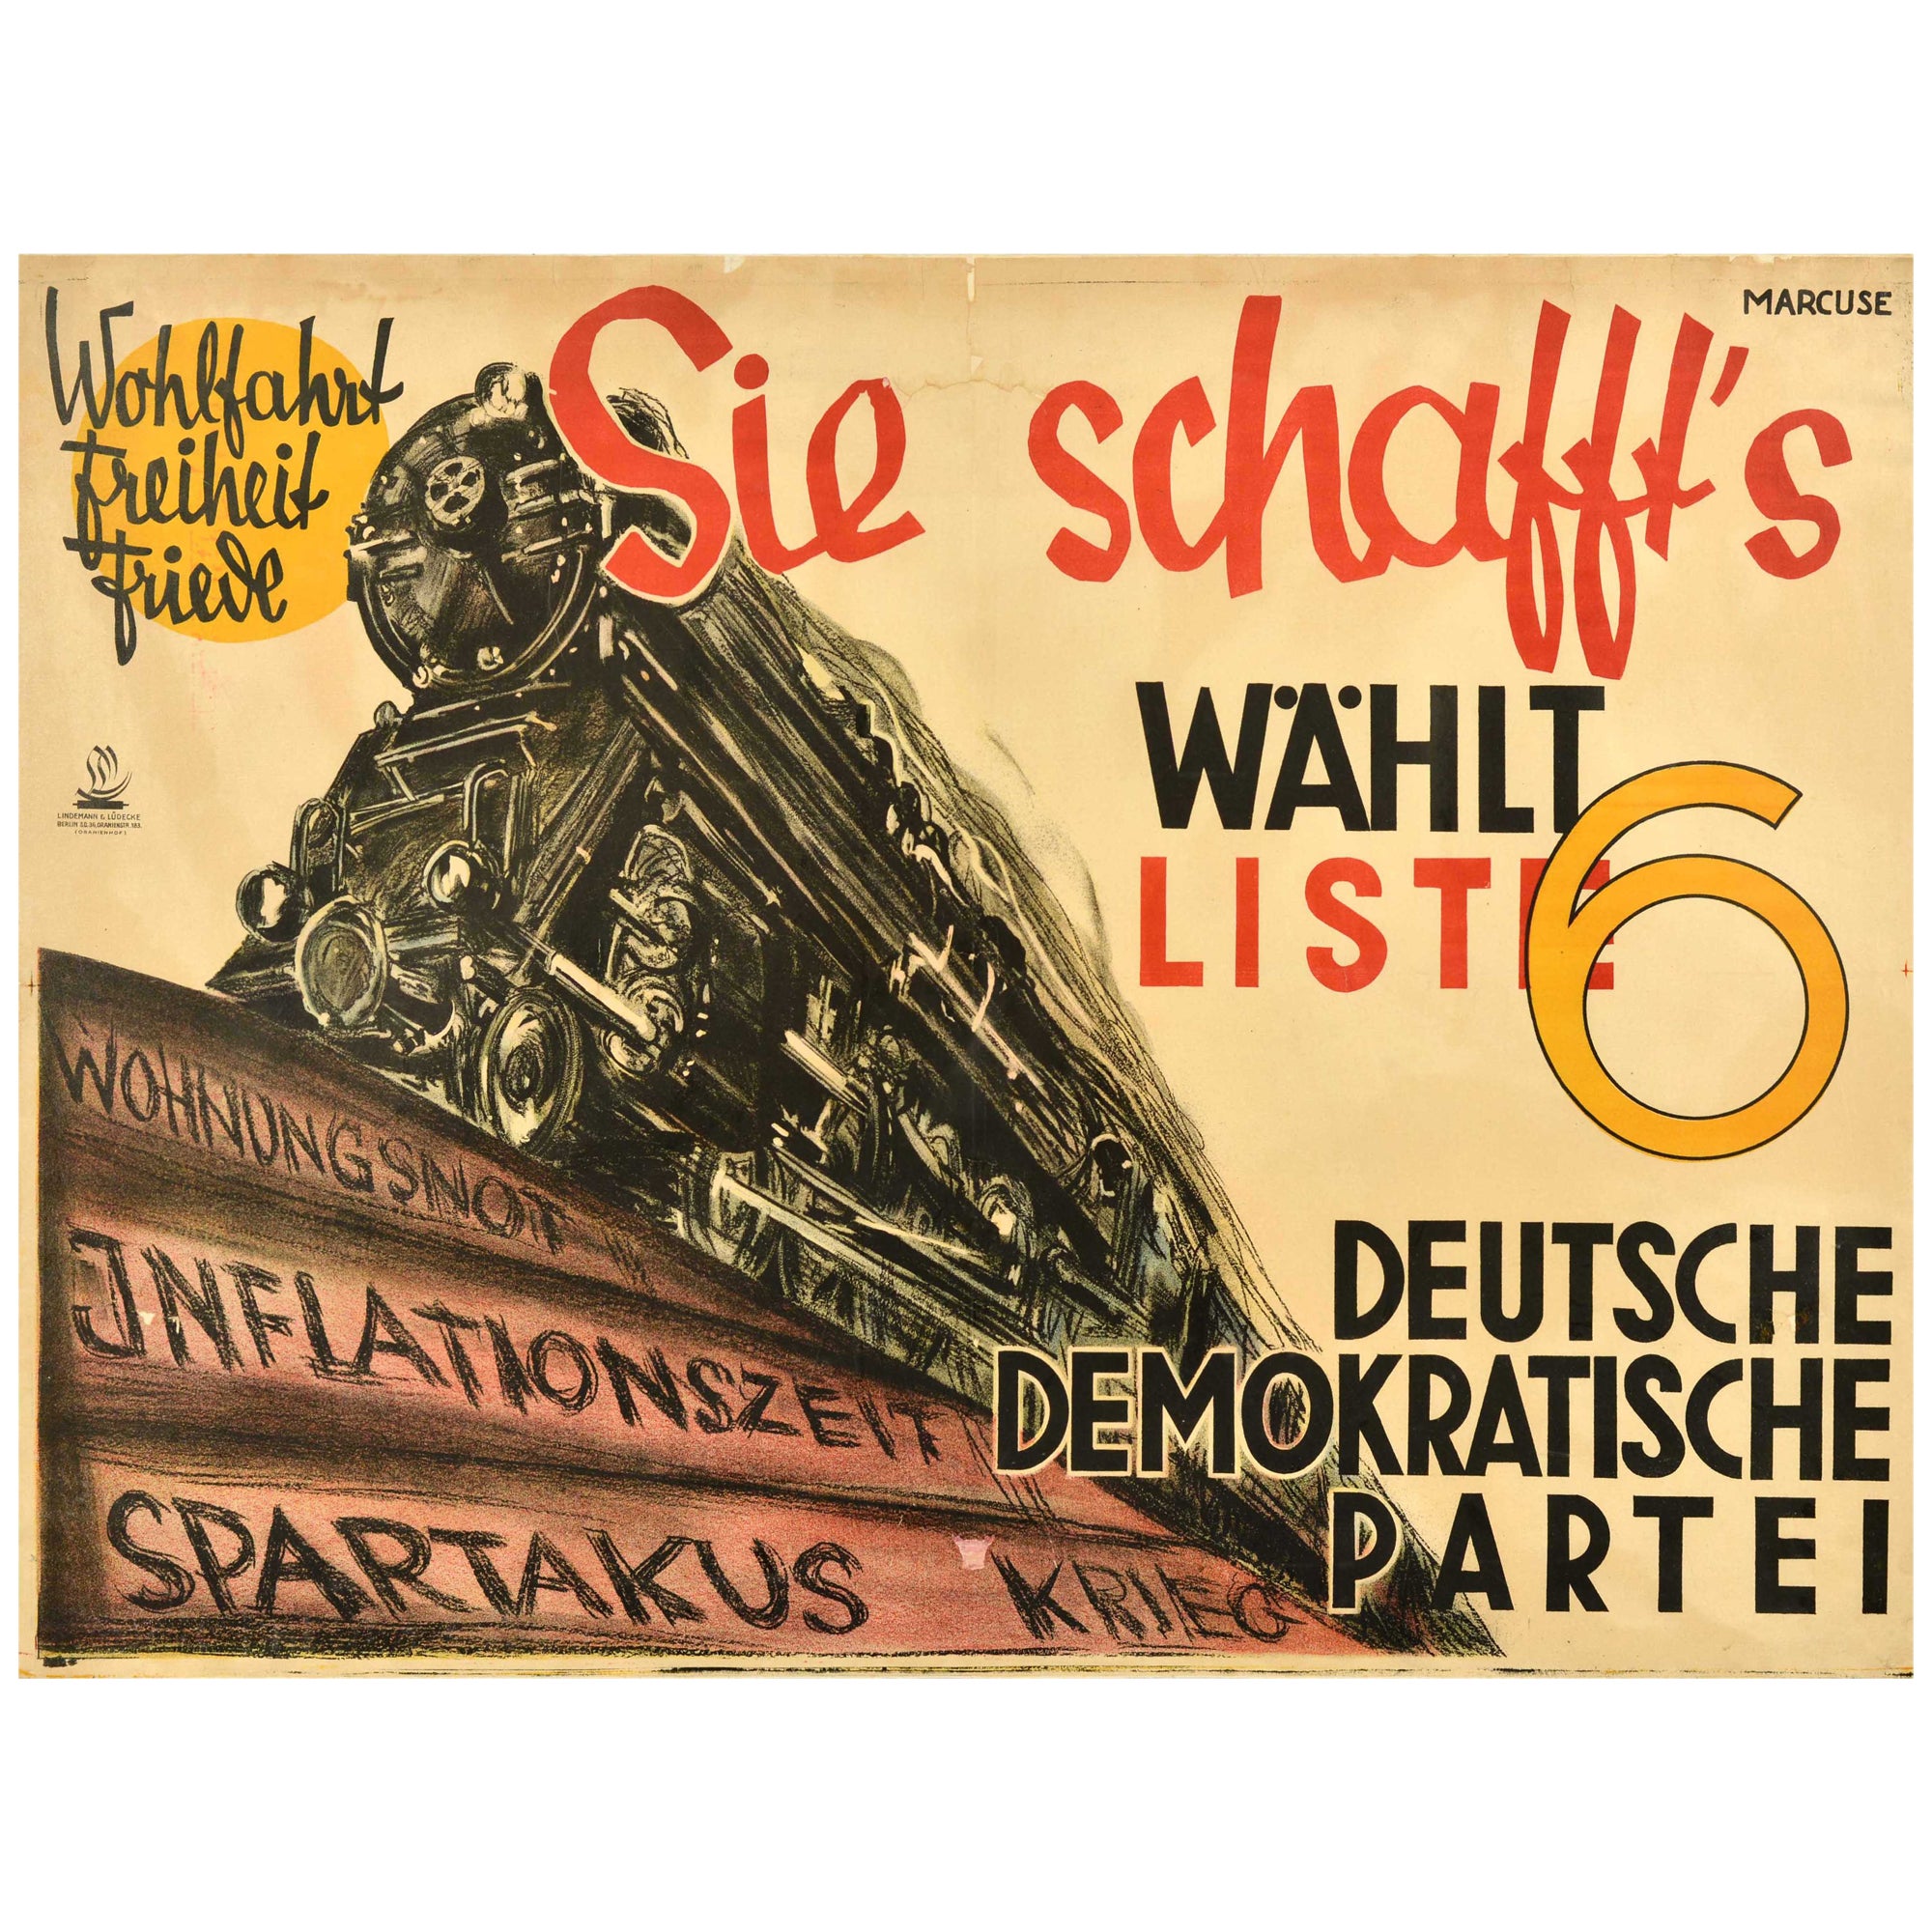 Original Antique Propaganda Election Poster German Democratic Party Train List 6 For Sale